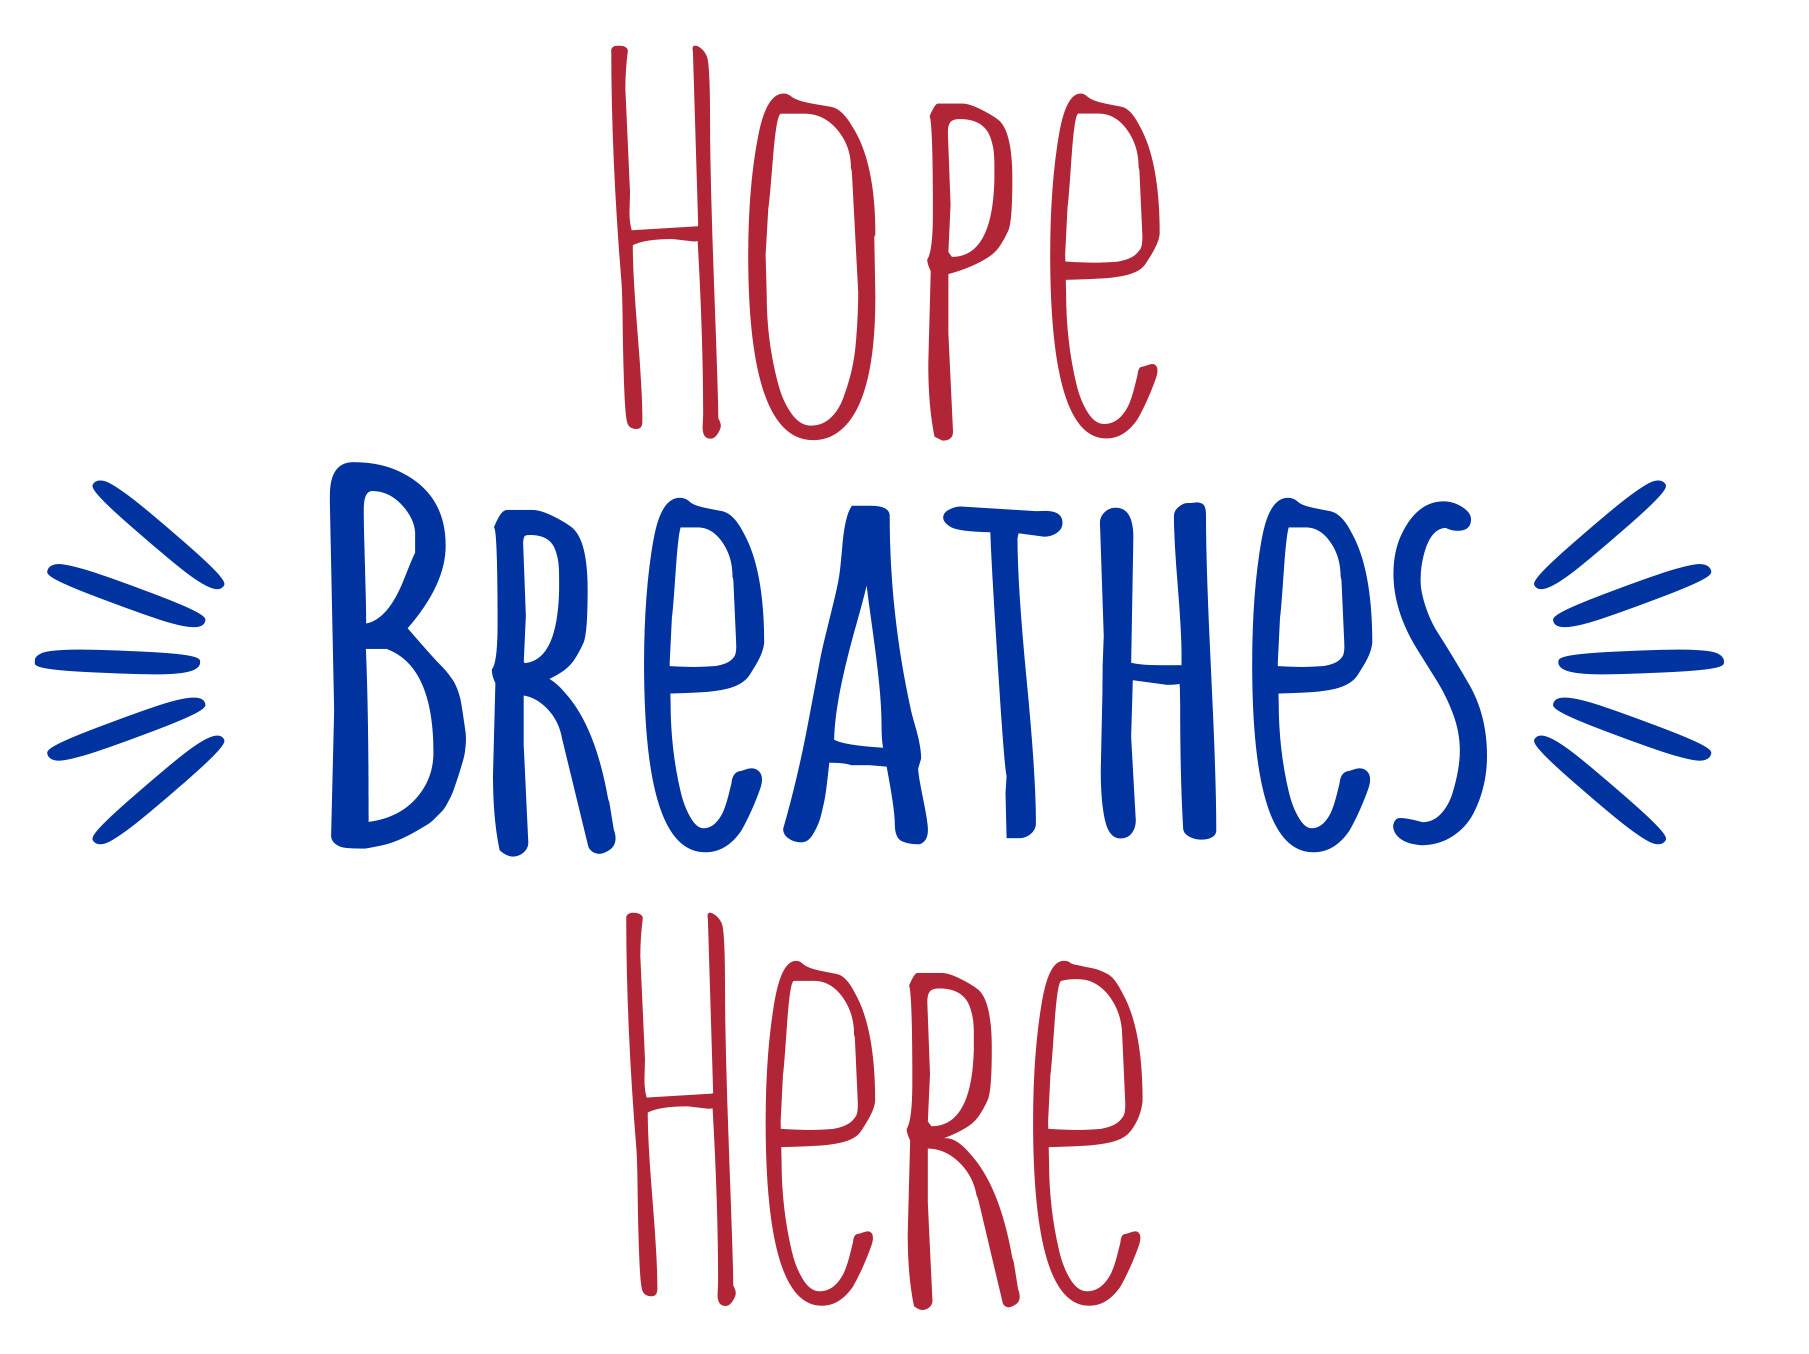 Hope breathes here logo